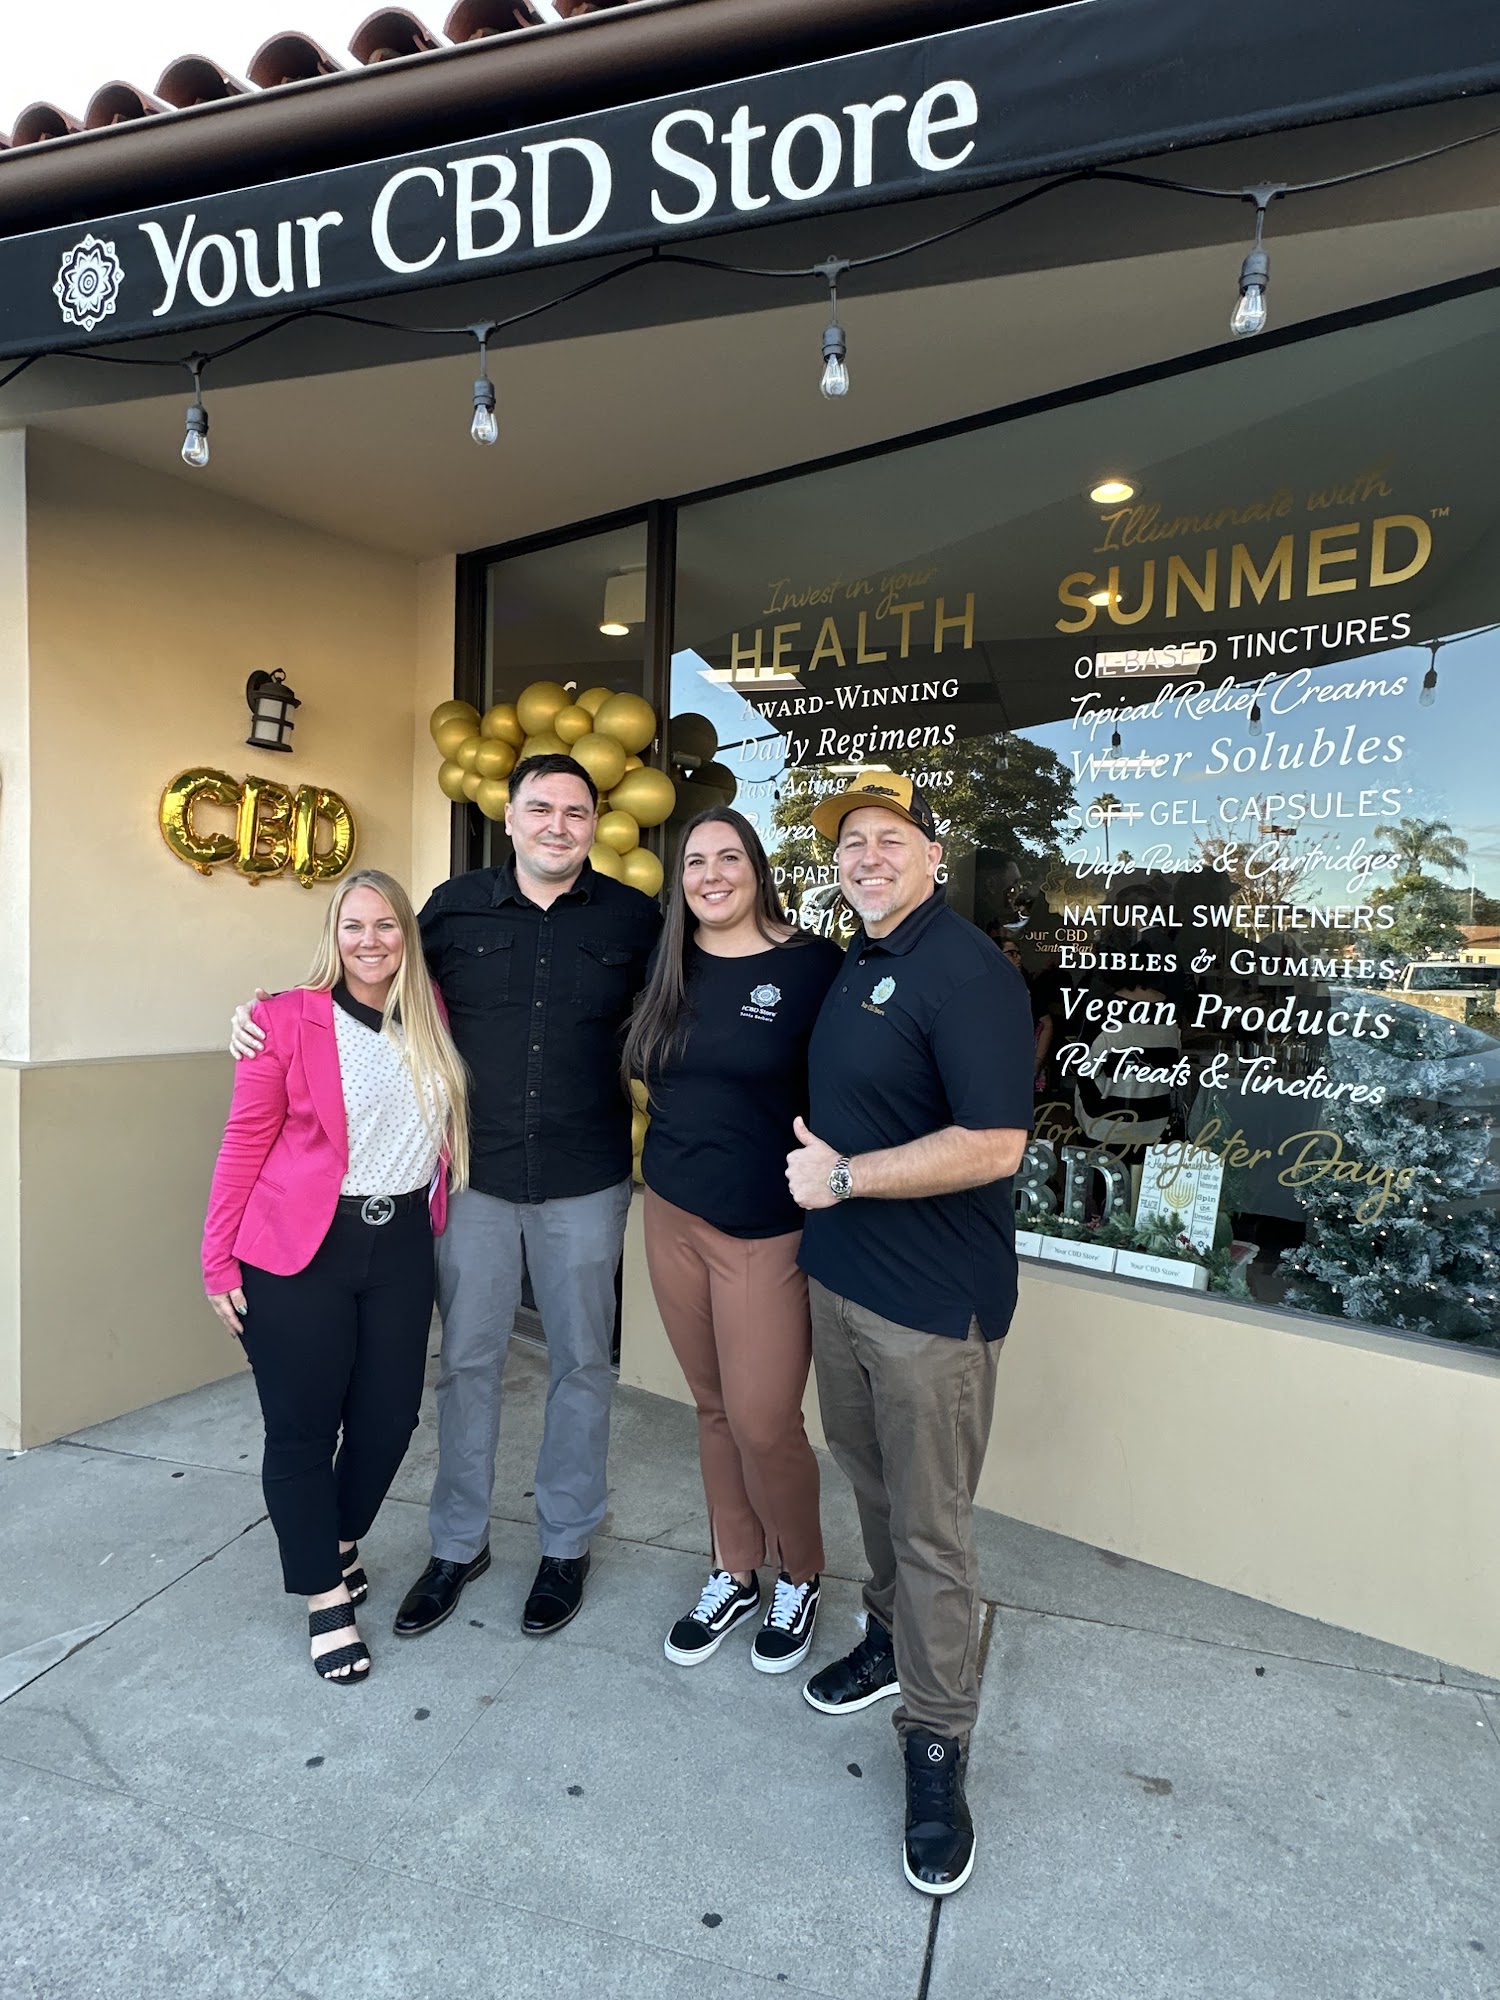 Your CBD Store | SUNMED - Santa Barbara, CA